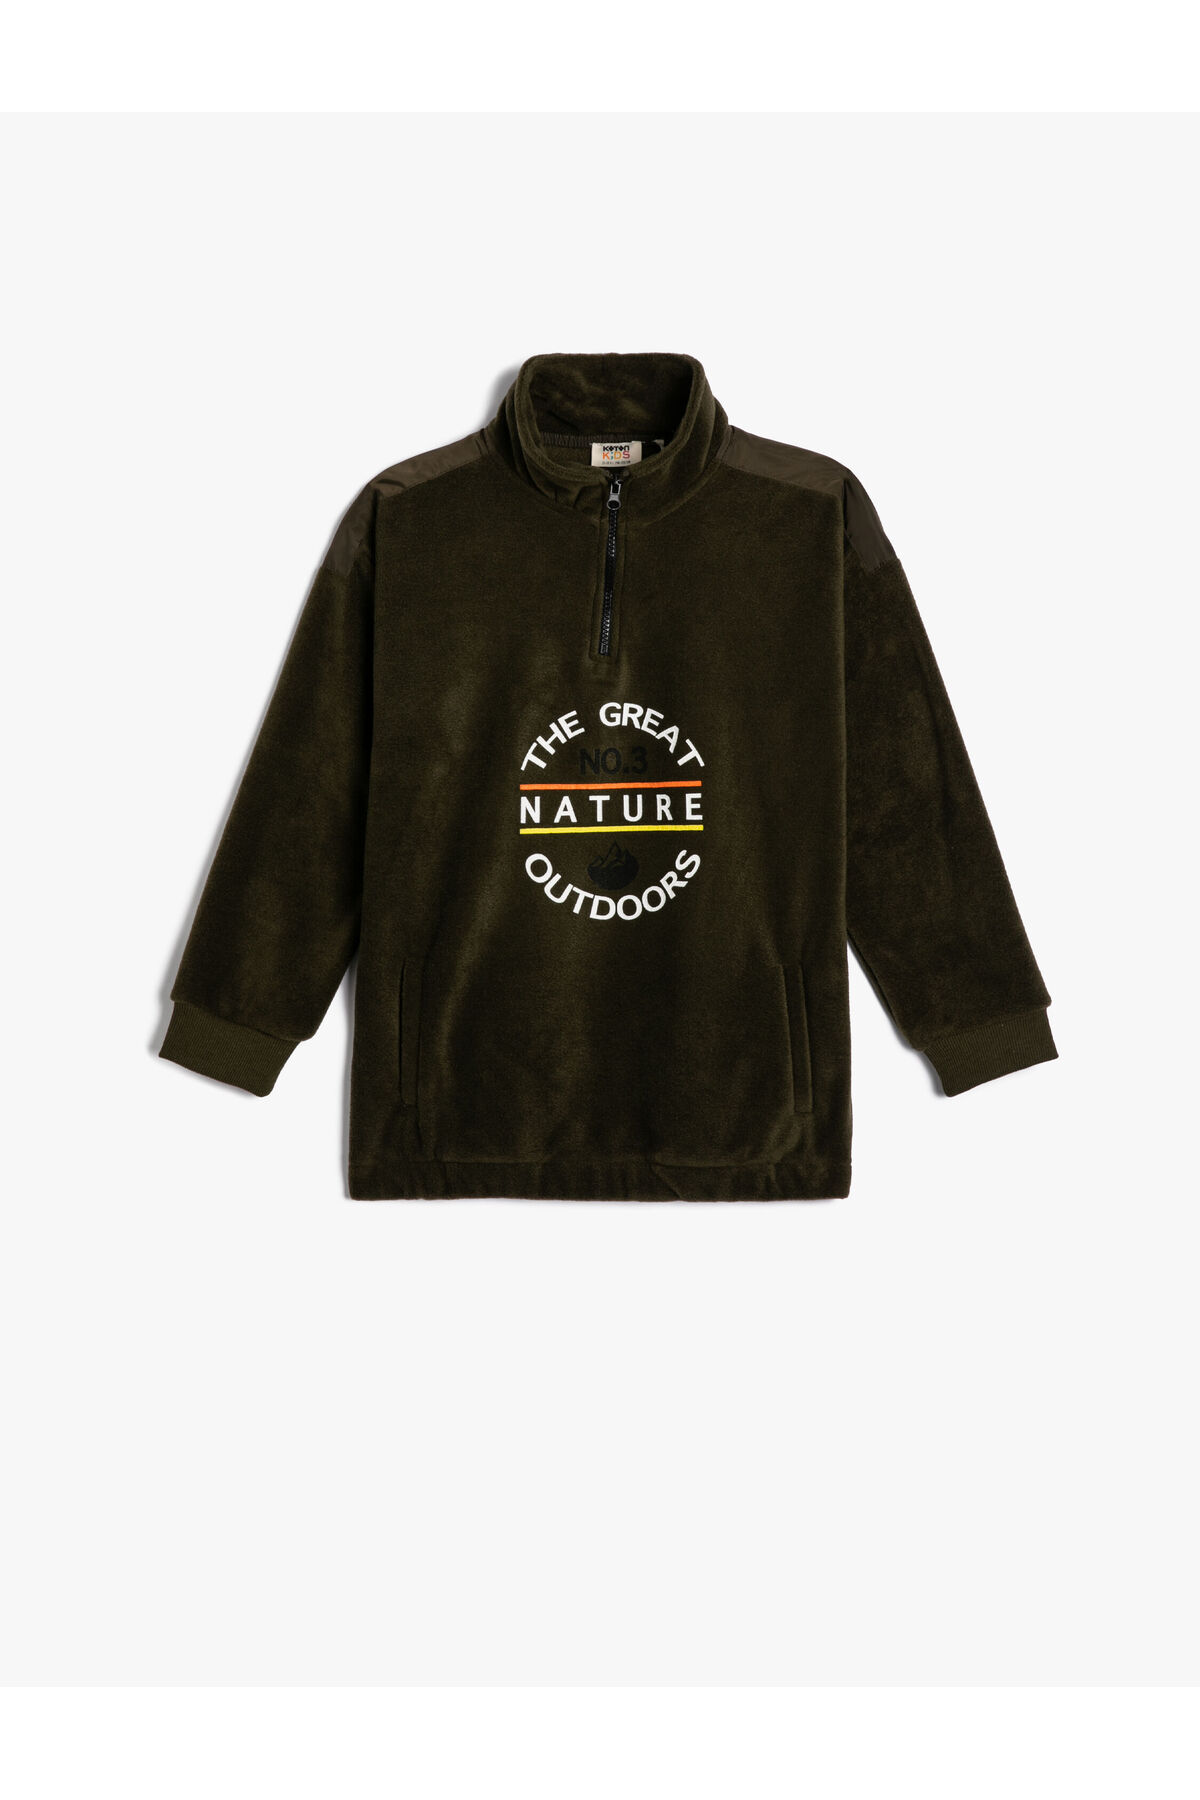 Levně Koton Fleece Sweatshirt Oversize Half Zipper Stand Collar Pocket Print Detailed